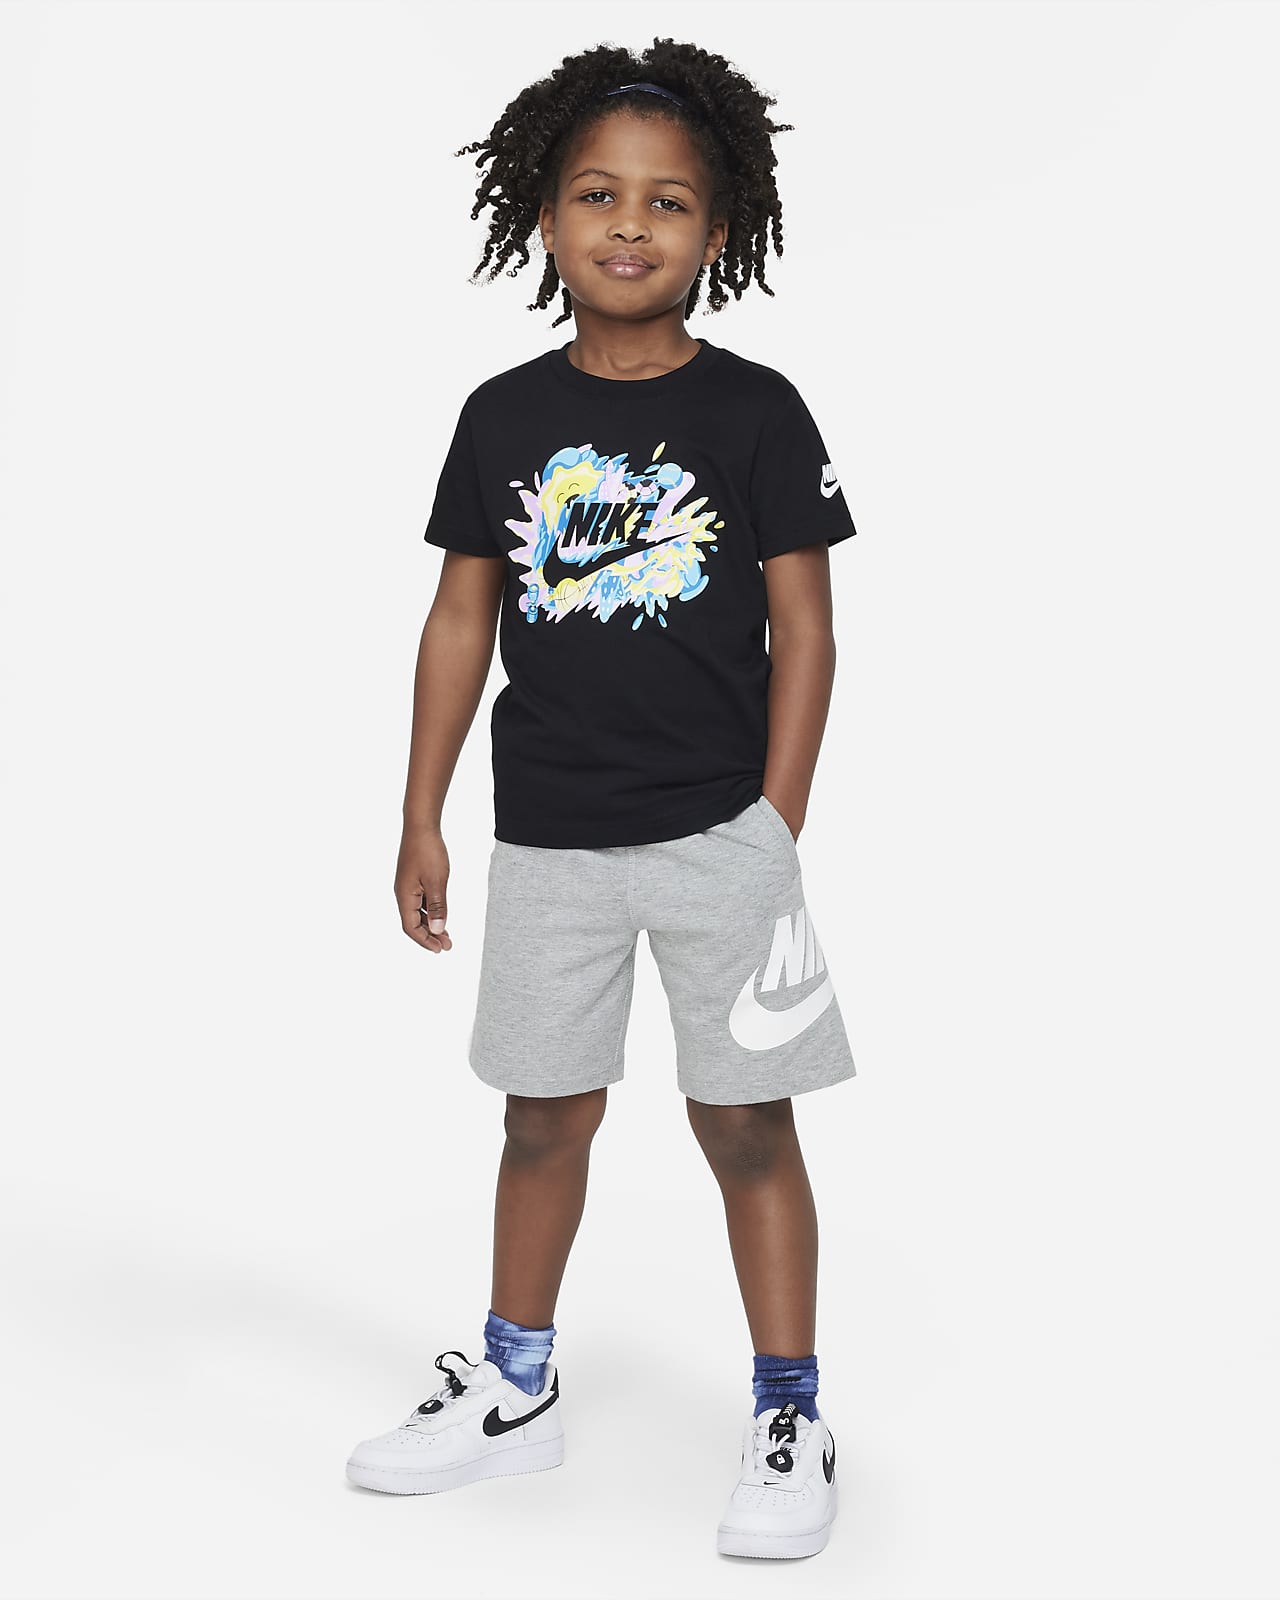 Little Splash Tee Kids\' Futura Nike T-Shirt. Sport